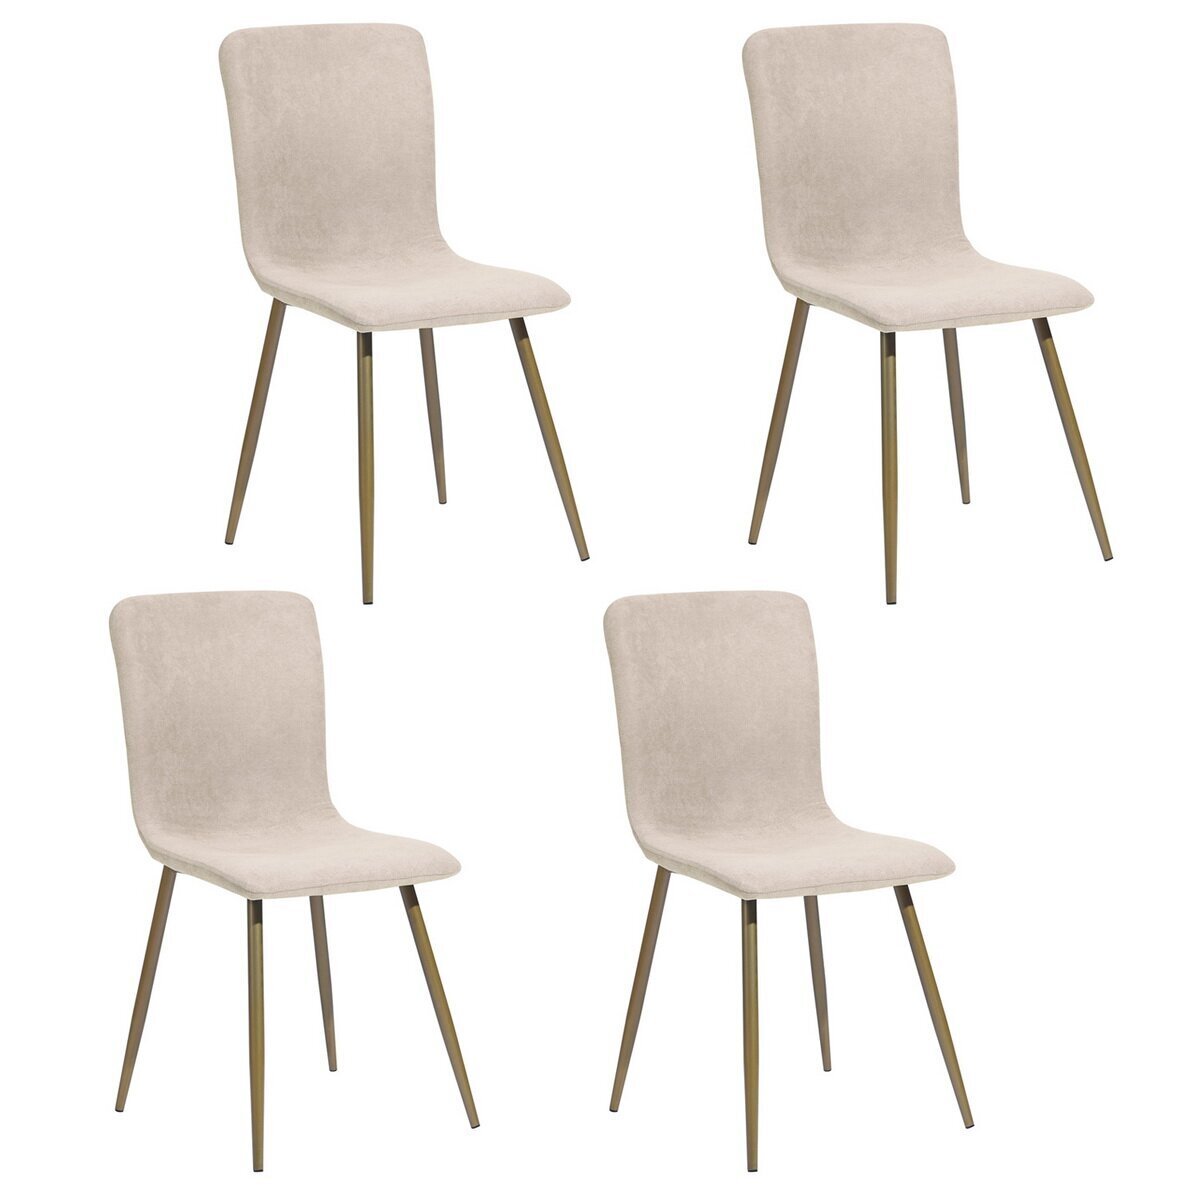 Midcentury Modern Chairs